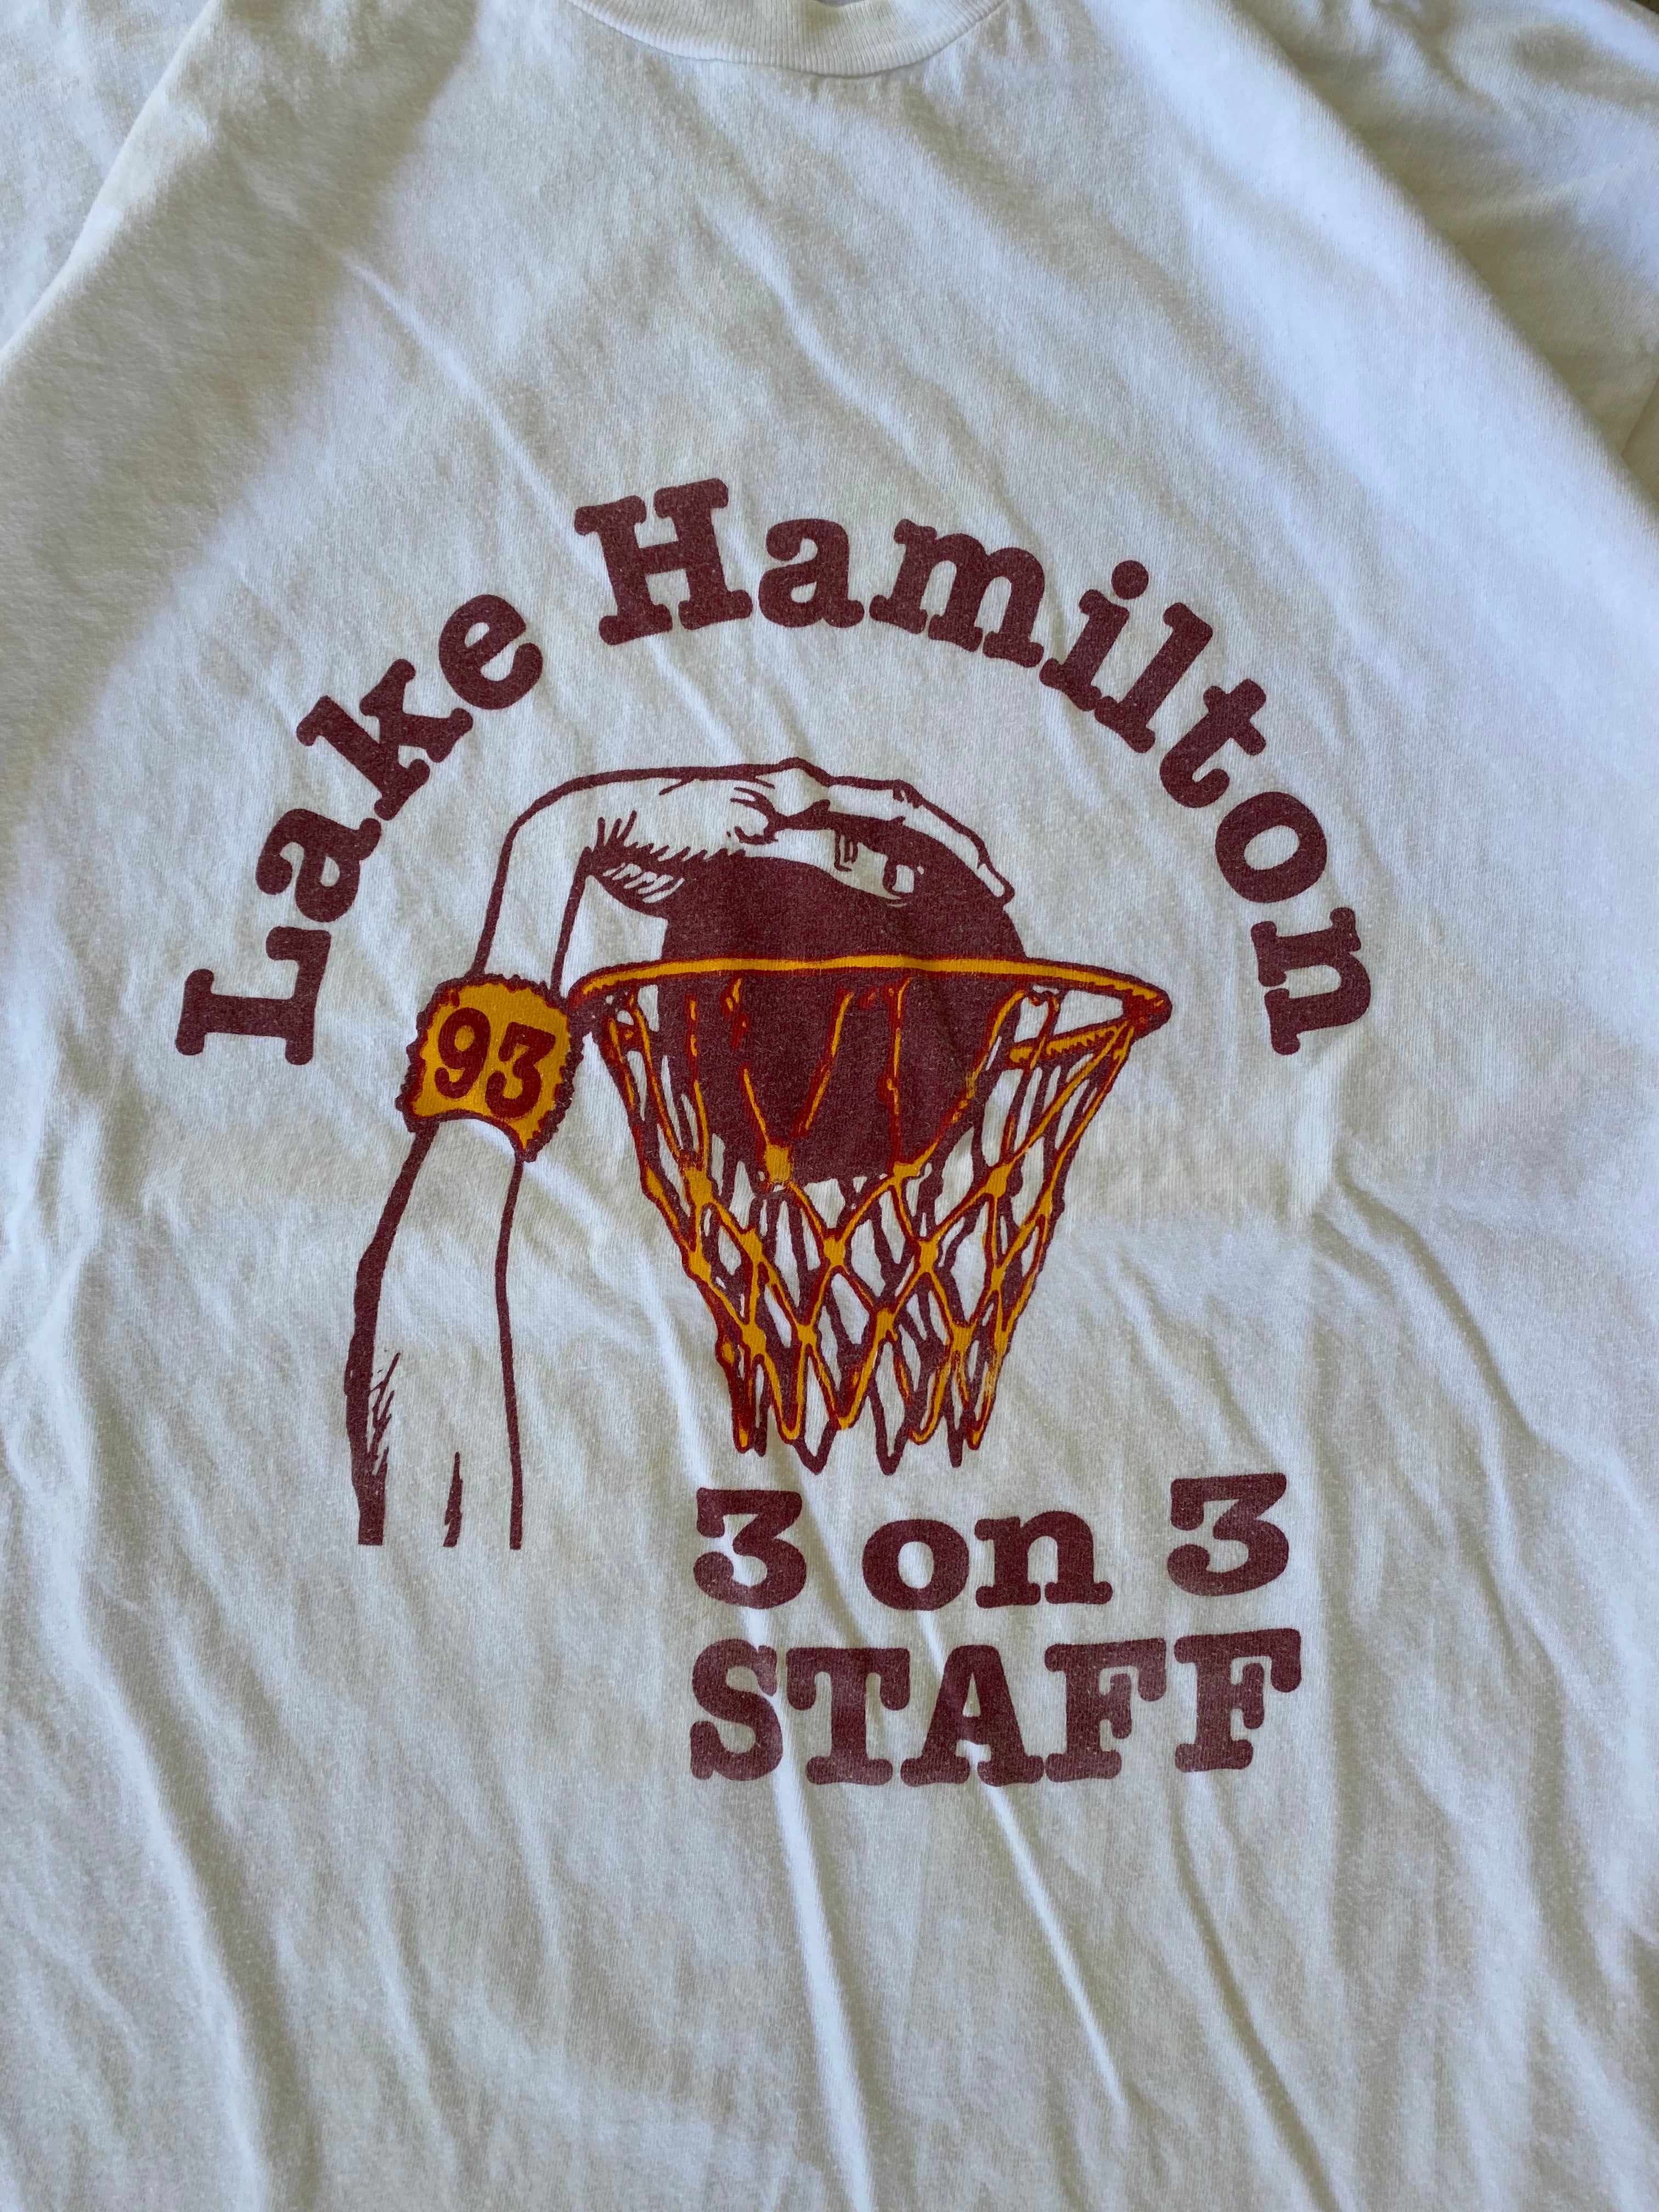 1993 Lake Hamilton "3 on 3" T-Shirt (XL)